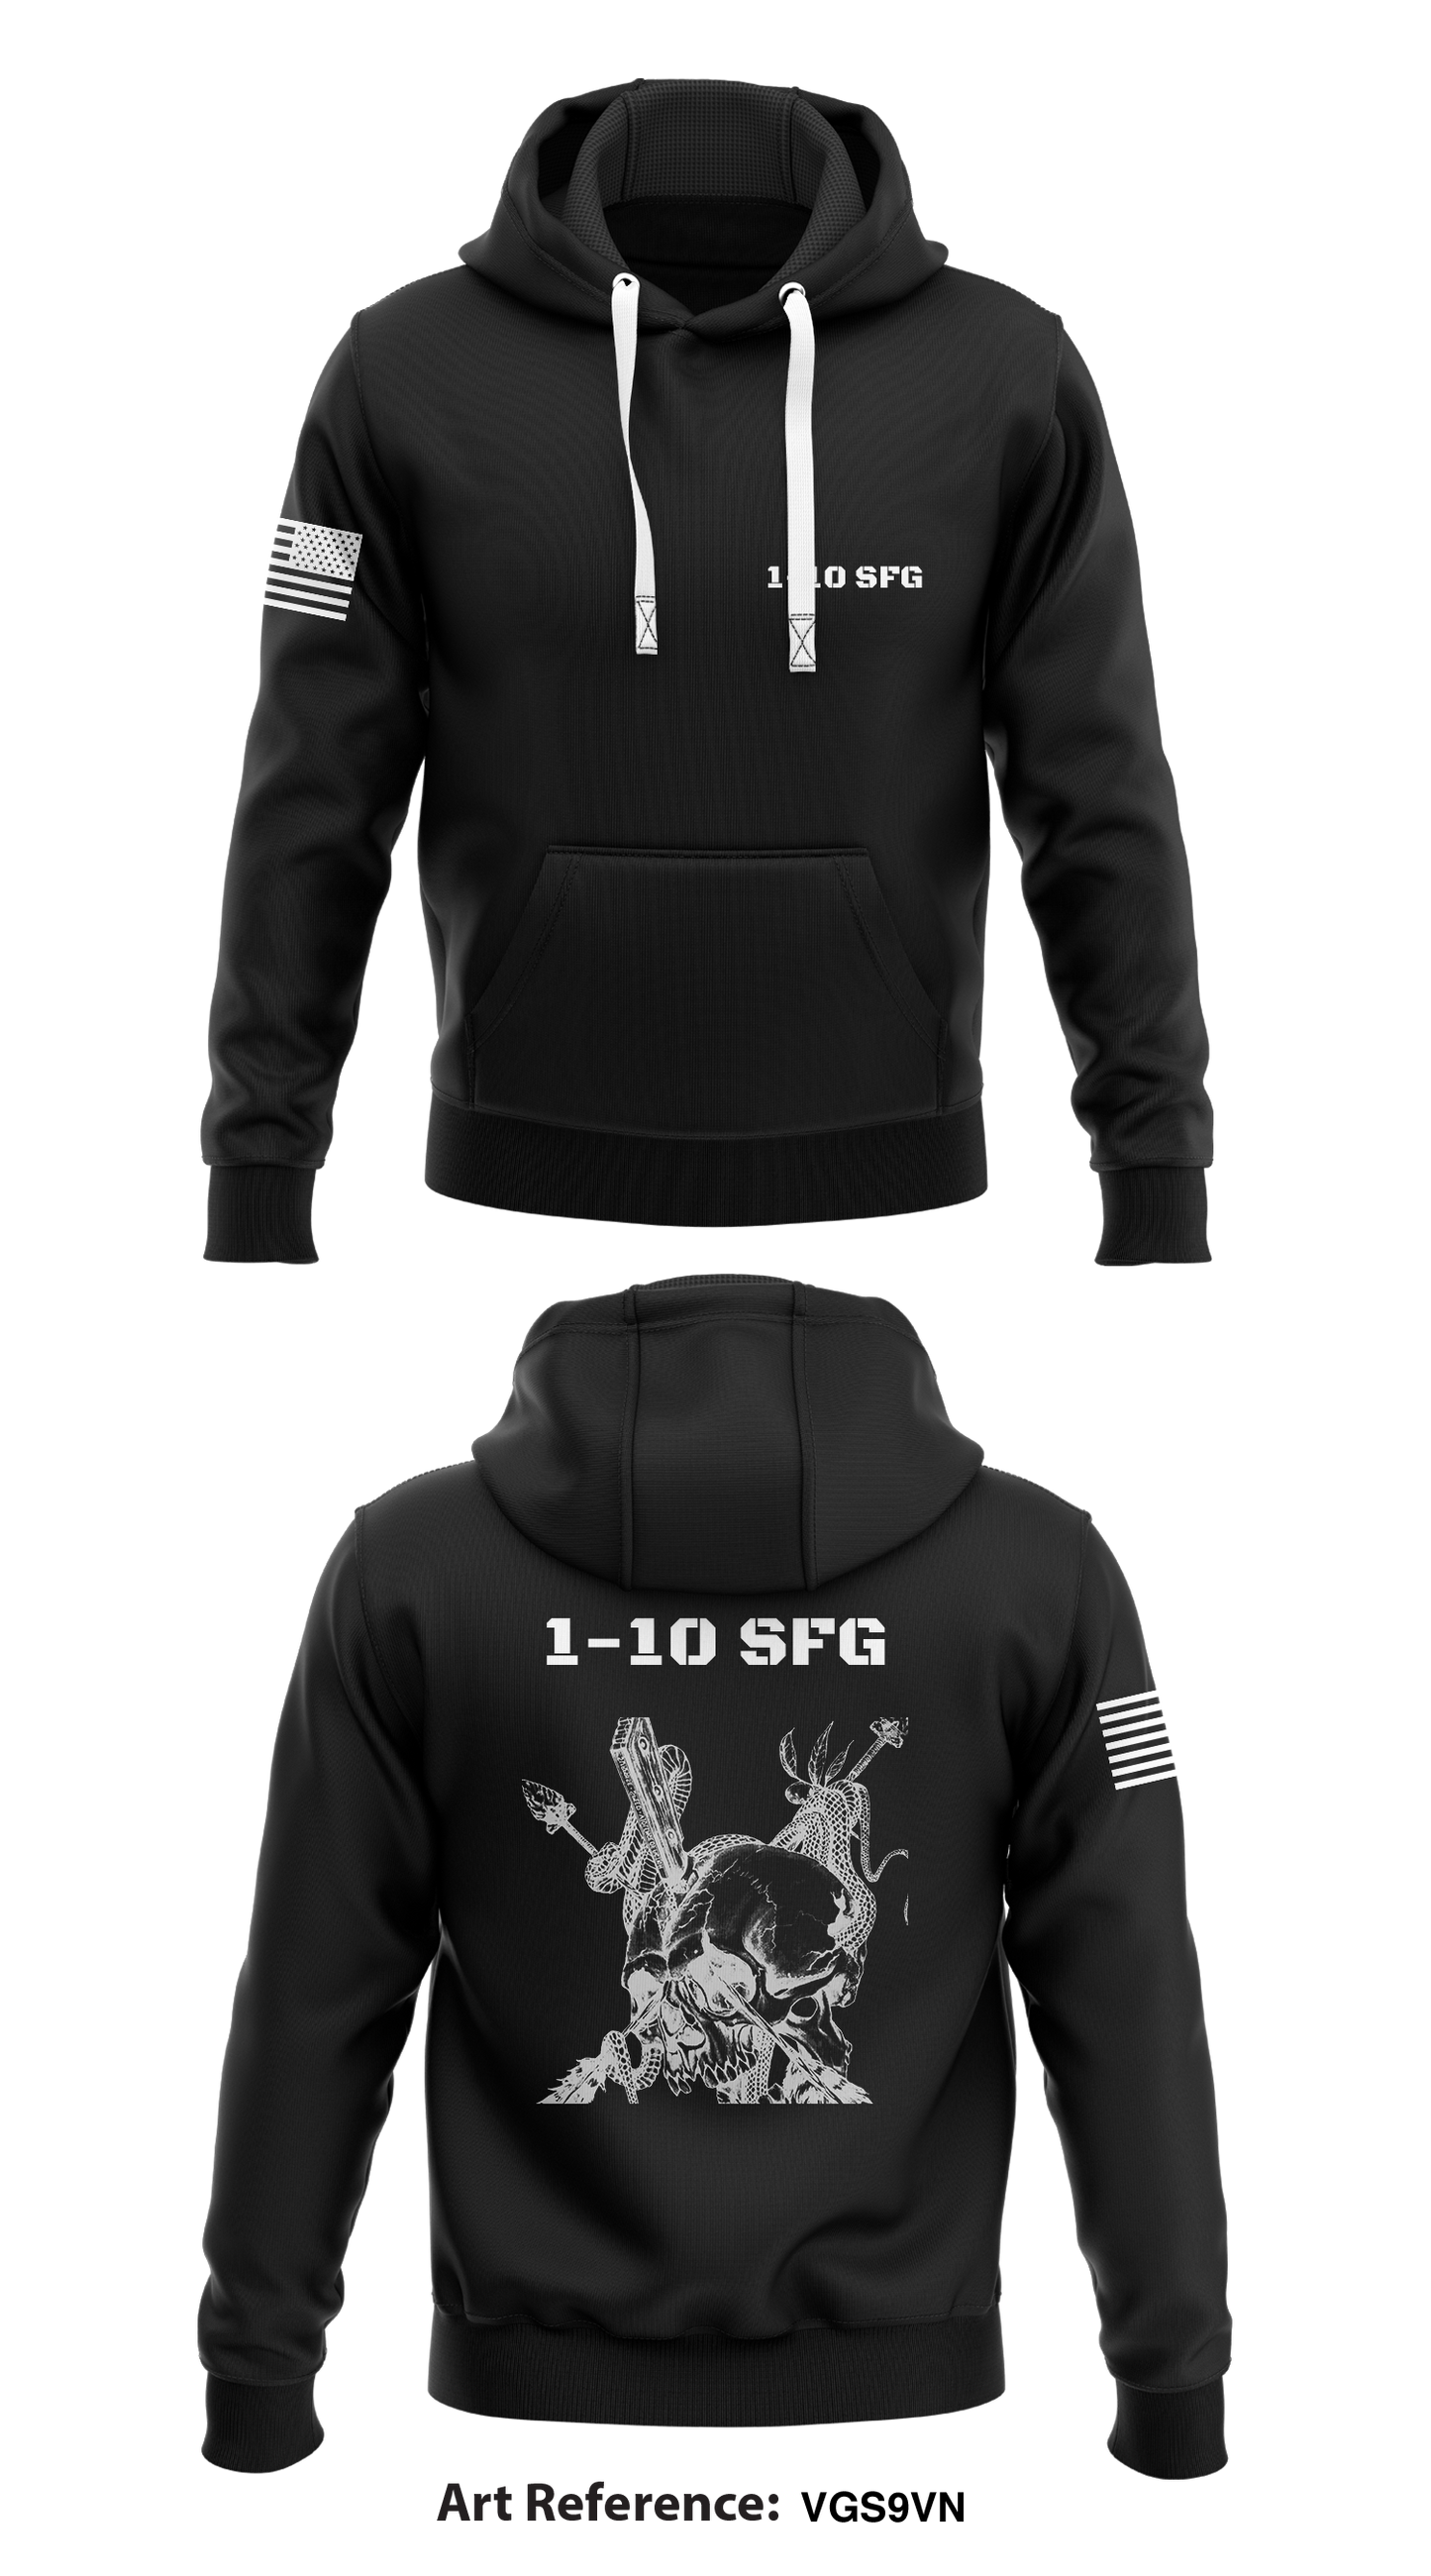 1-1 SFG Store 1  Core Men's Hooded Performance Sweatshirt - VGs9vN